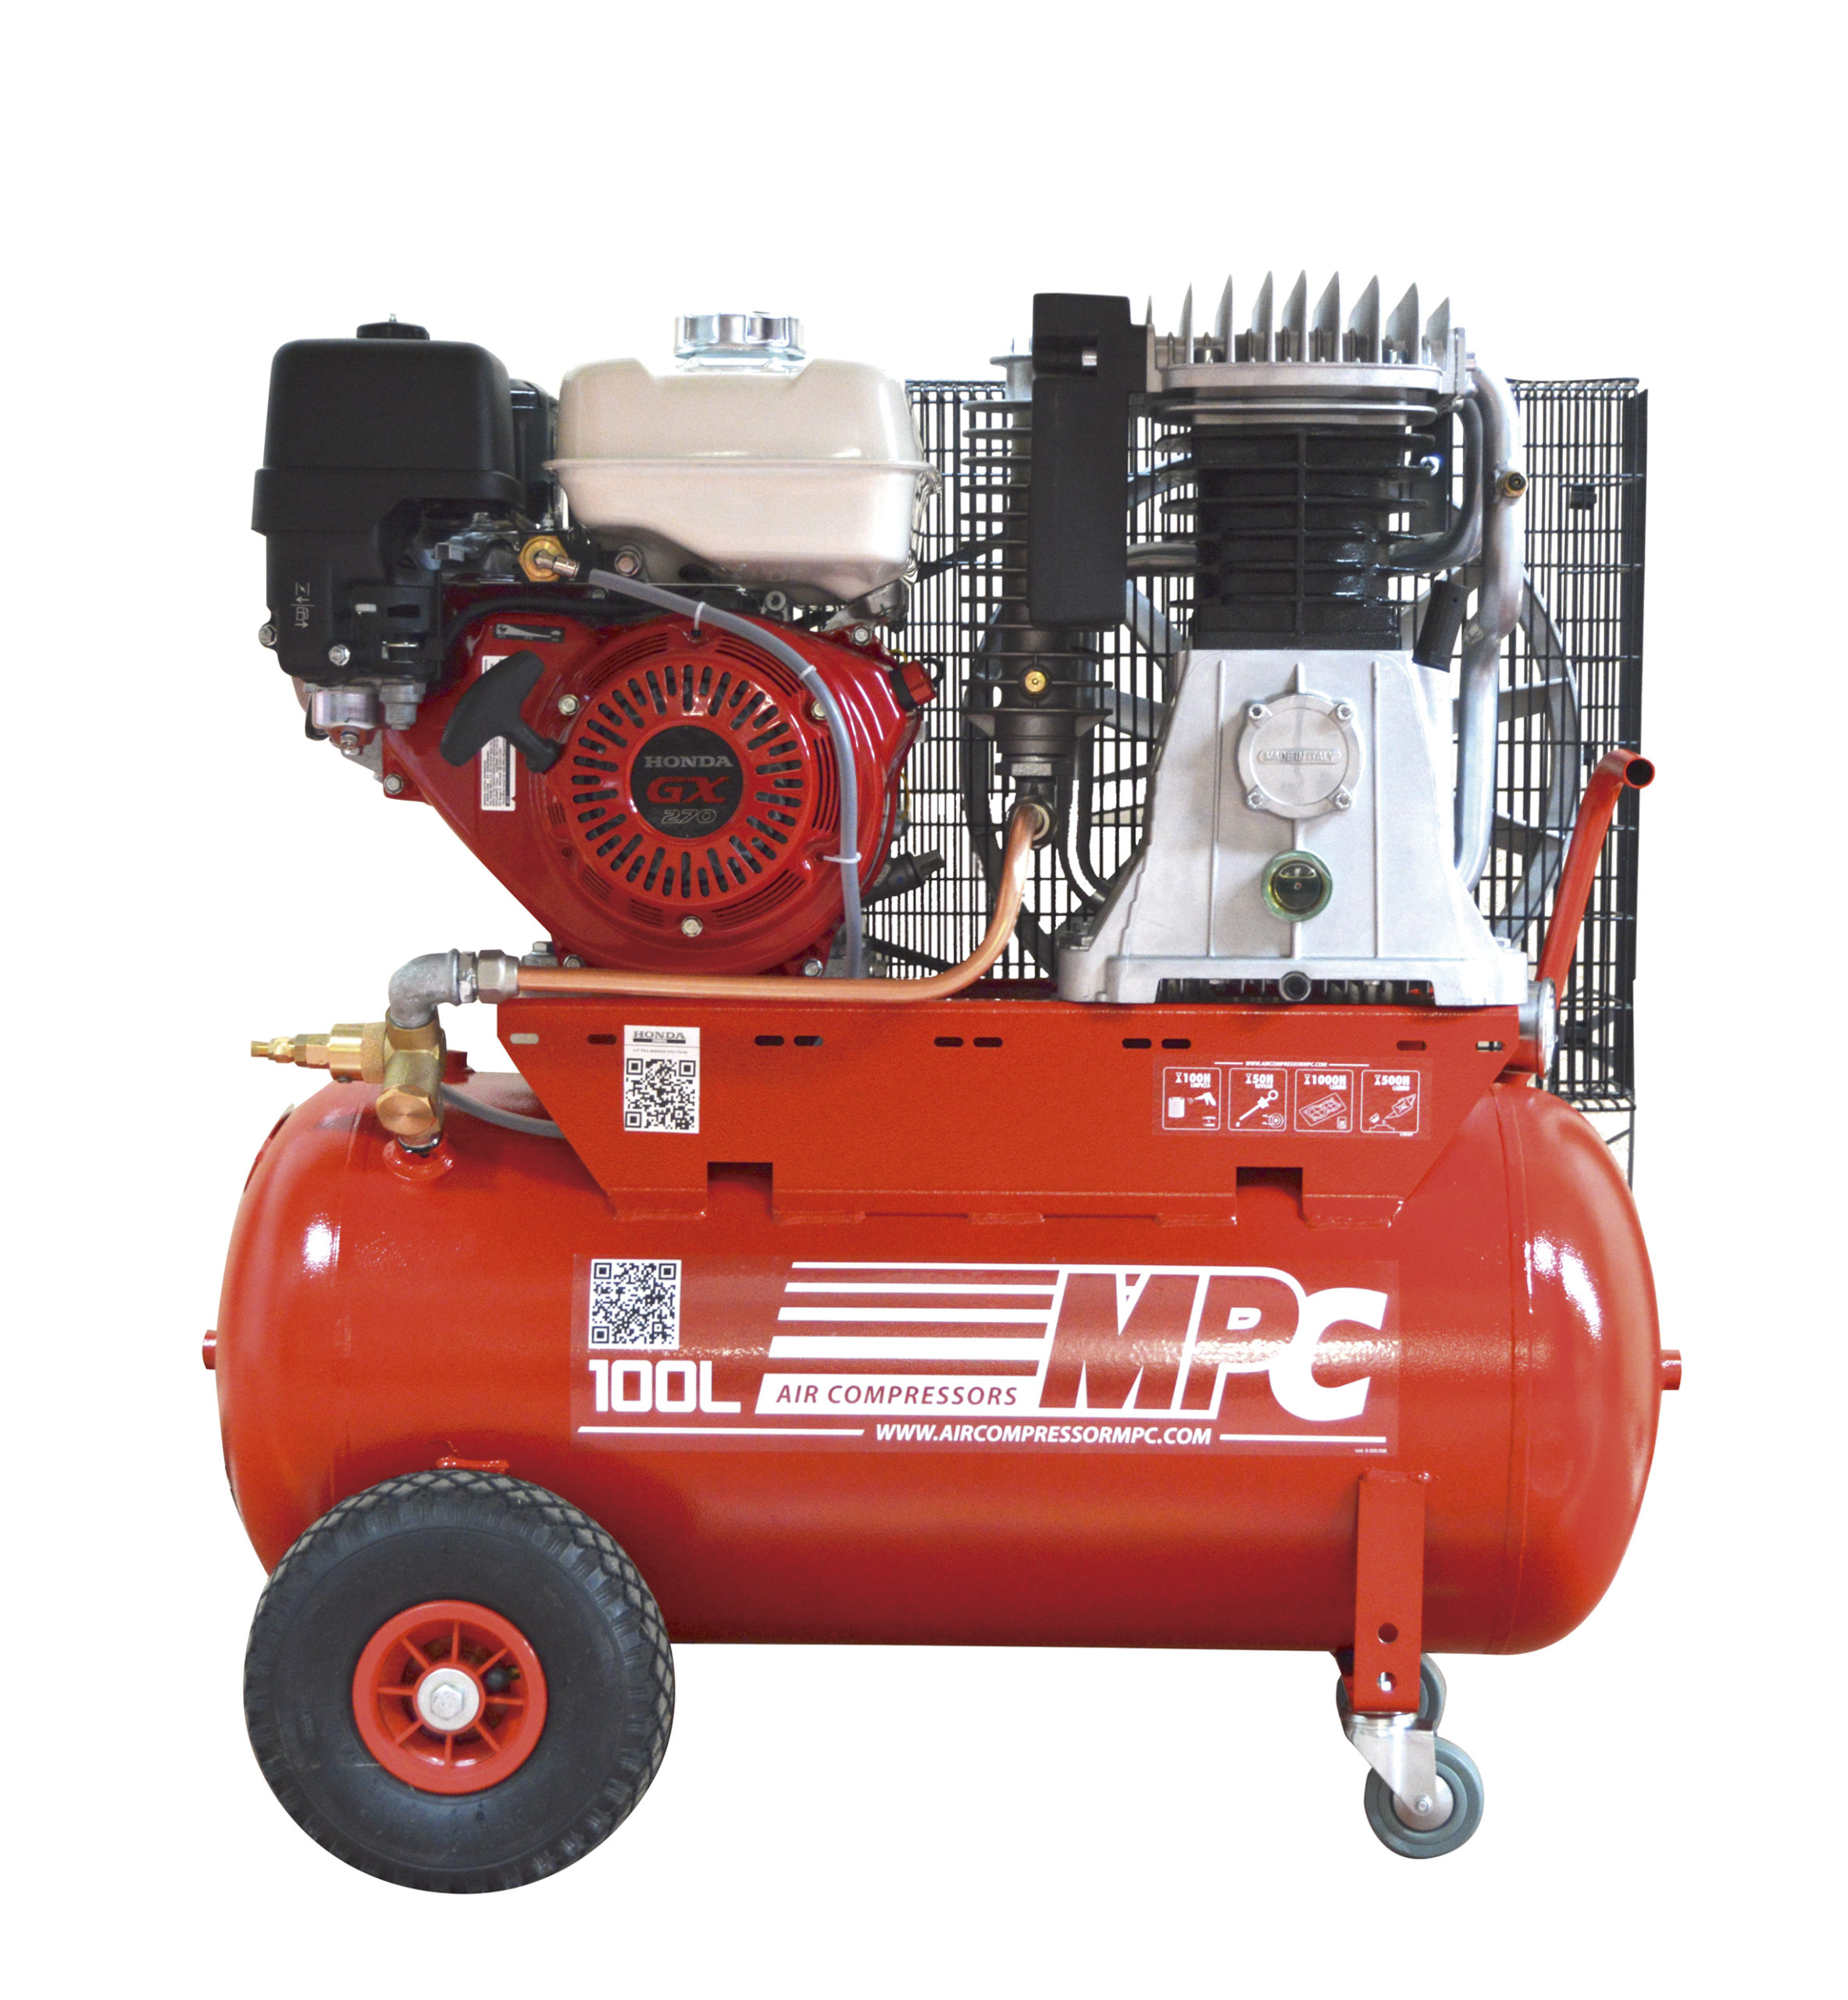 MOTOCOMPRESOR STRADE 90-100/ 11 BAR (100L) - aircompressormpc